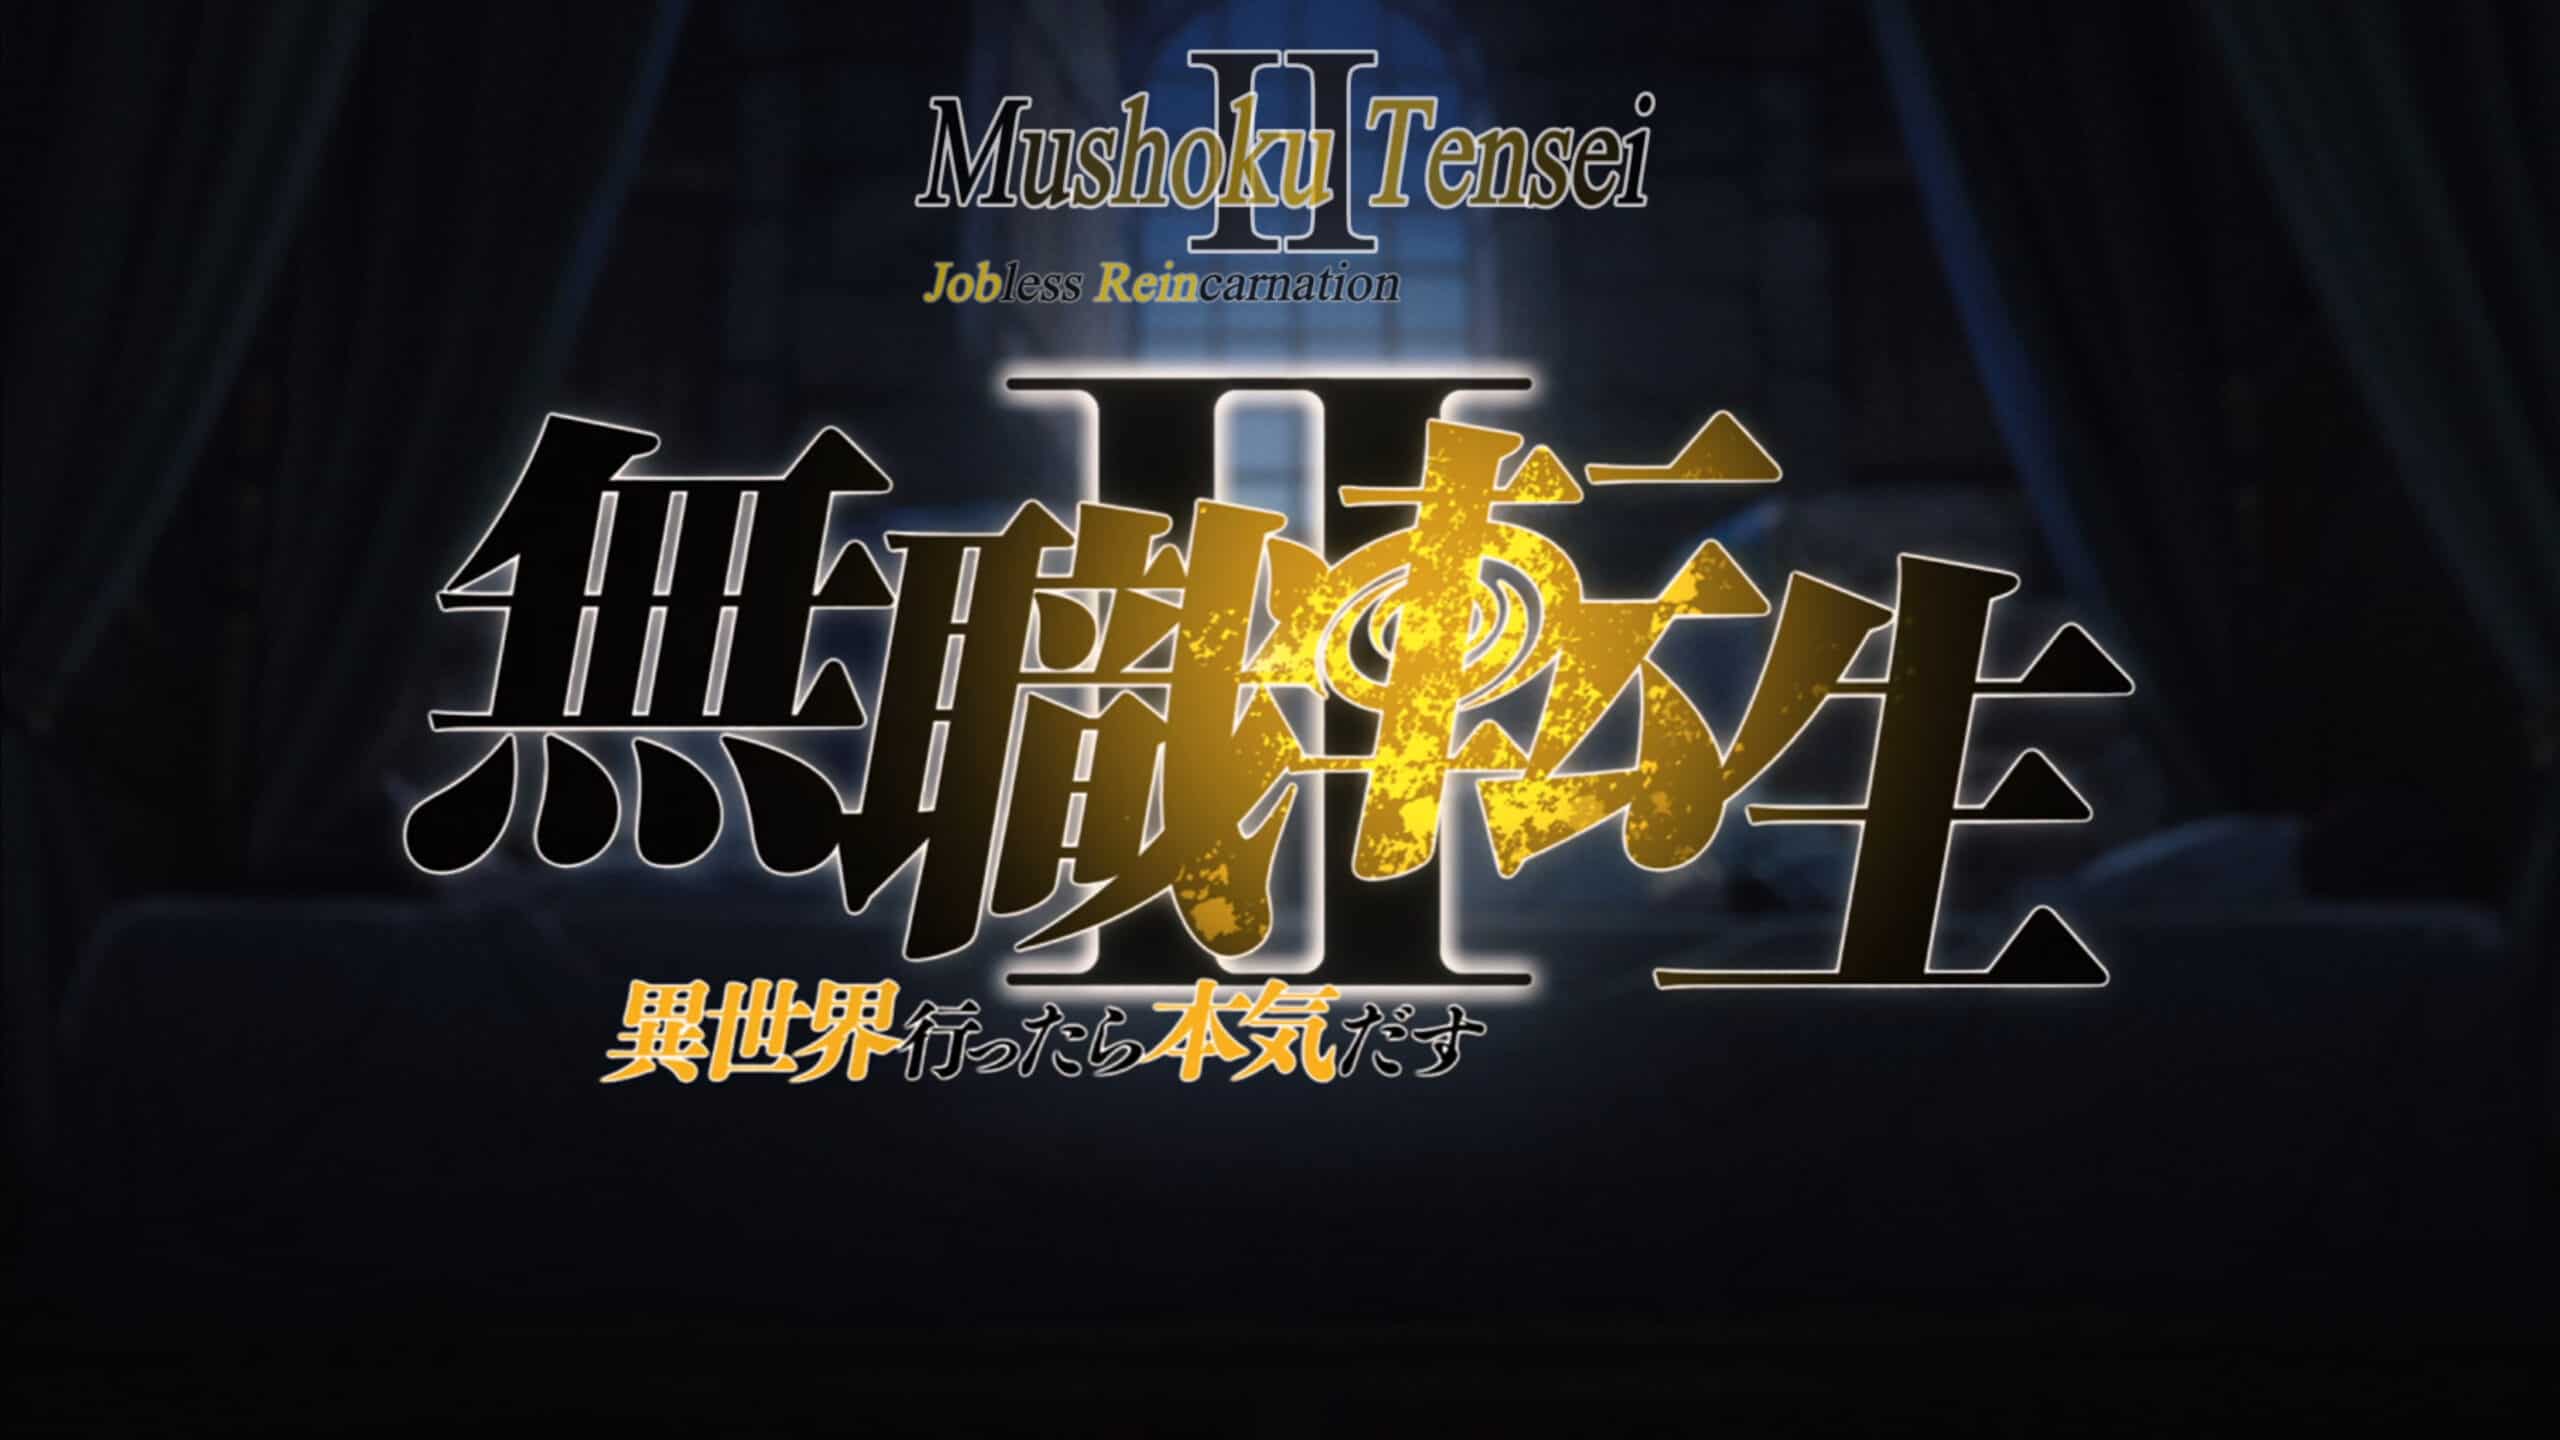 Title Card - Mushoku Tensei Jobless Reincarnation Season 2 Episode 6 “I Don't Want To Die”